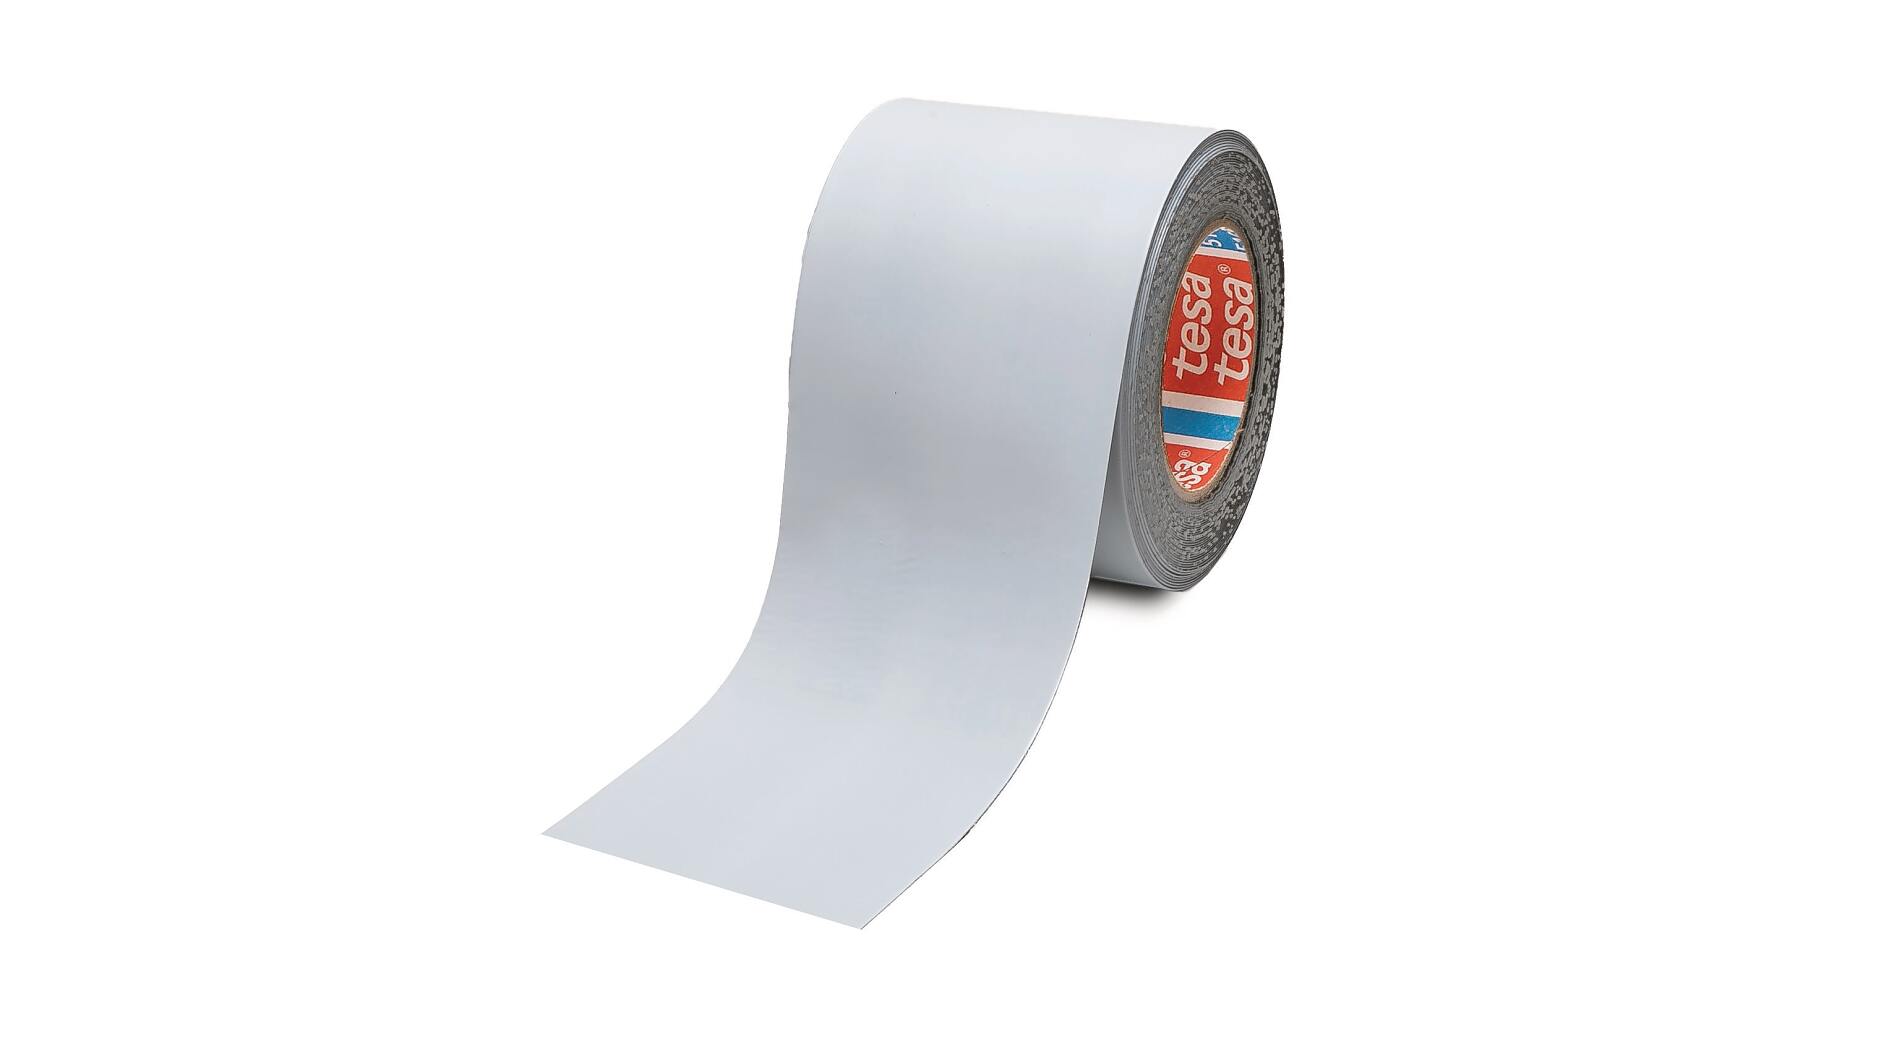 Buy Encapsulation Seam Tape